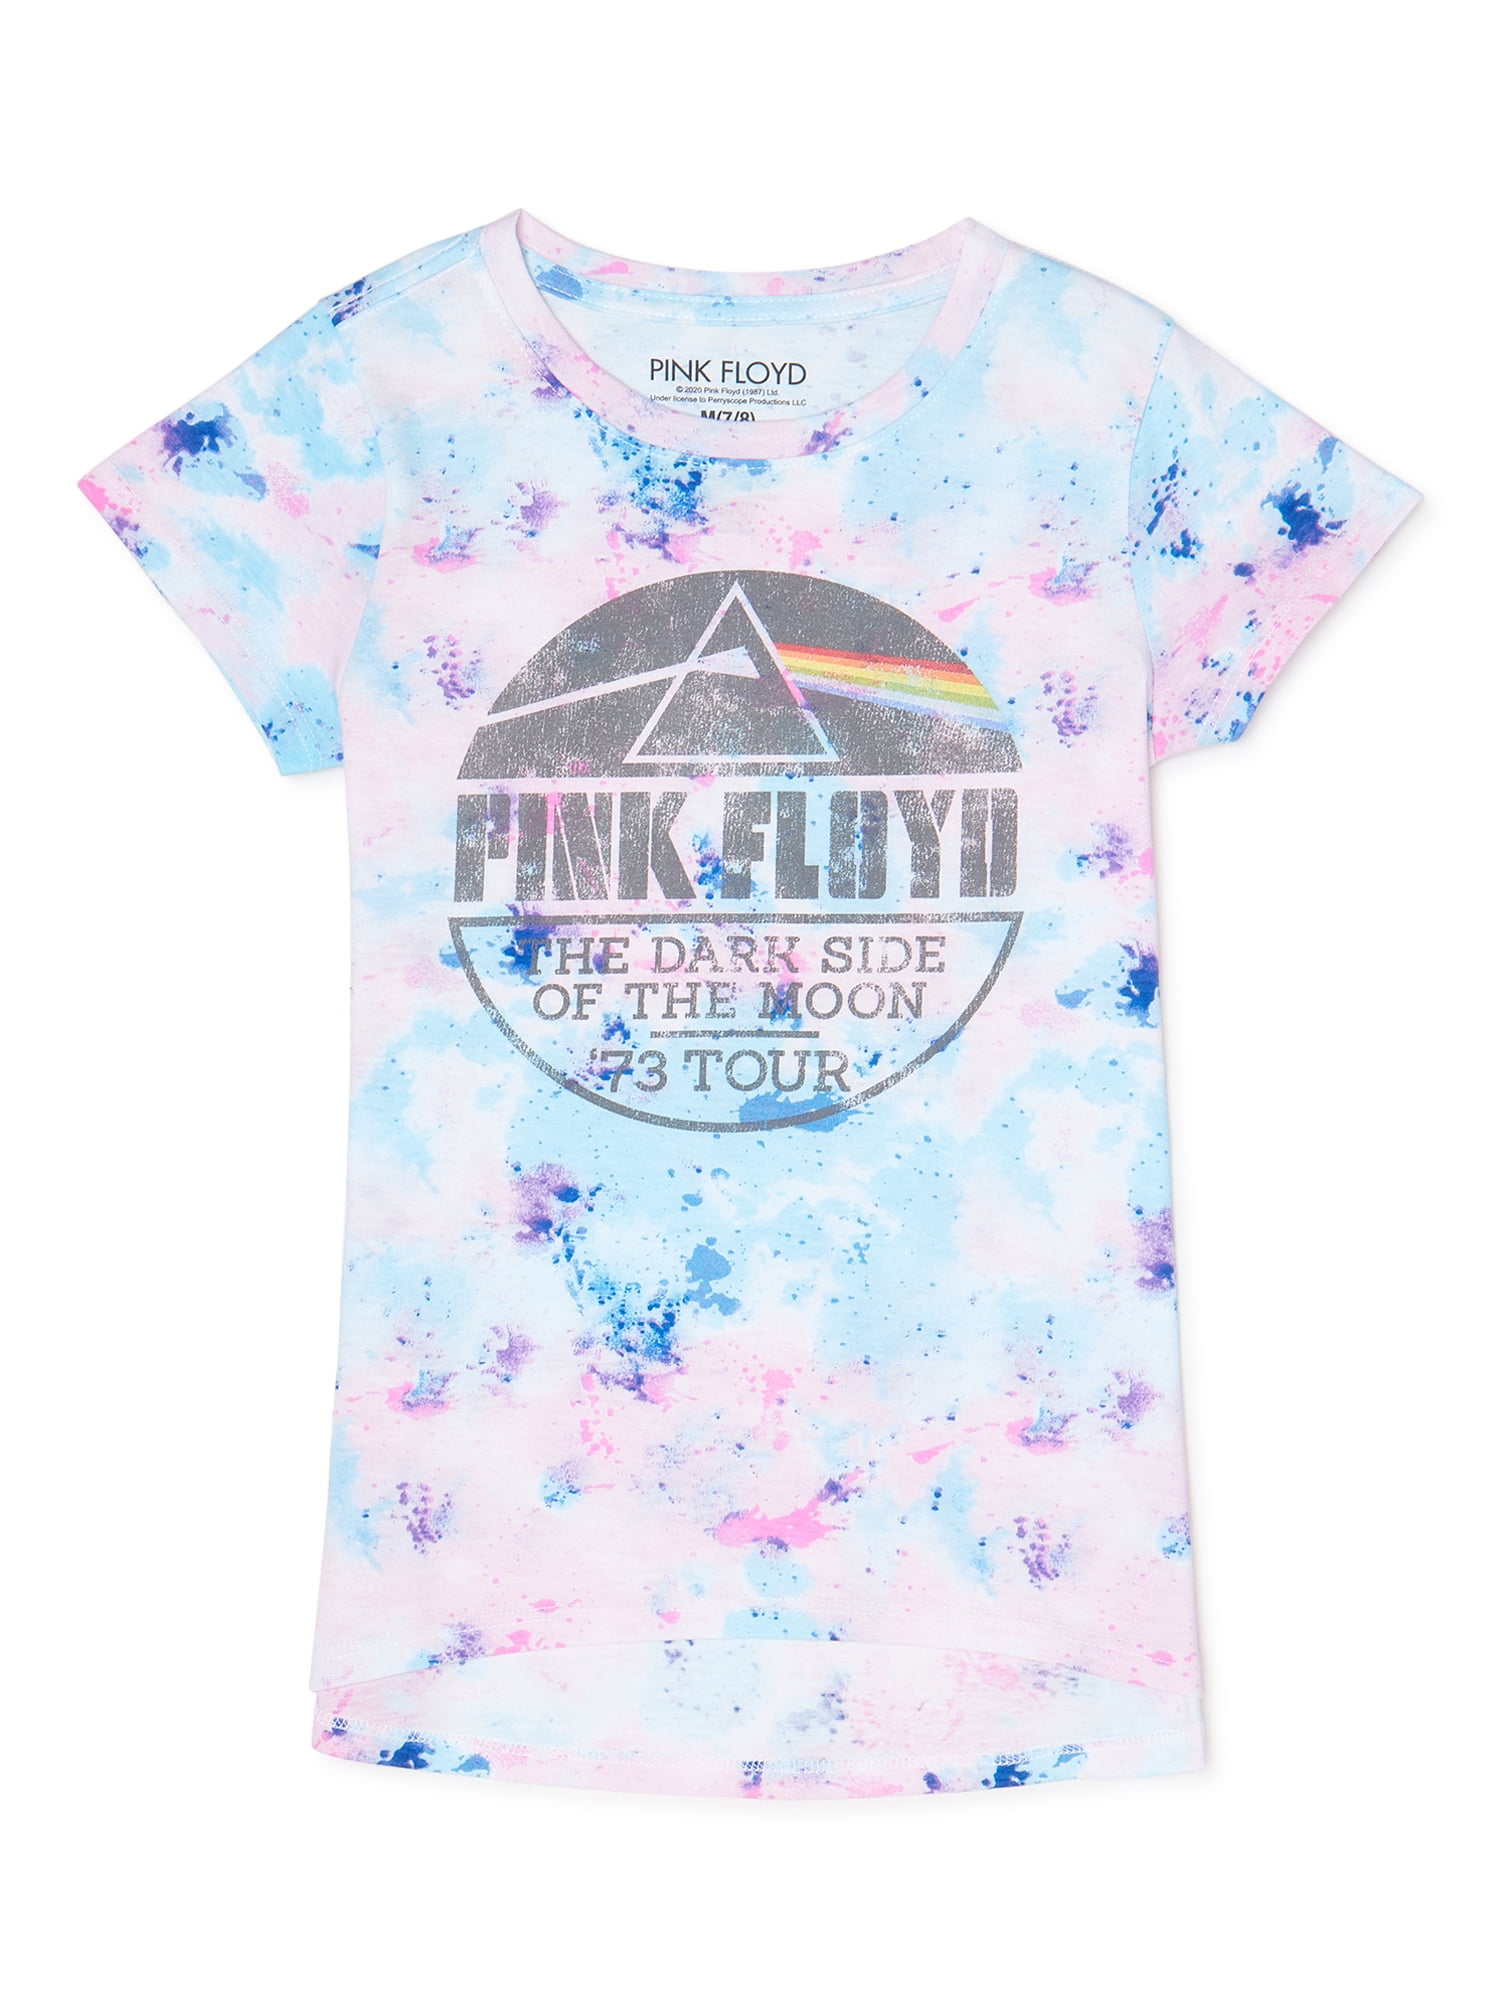 Pink Floyd Girls Tie-Dye Graphic T-Shirt, Sizes 4-16 - Walmart.com